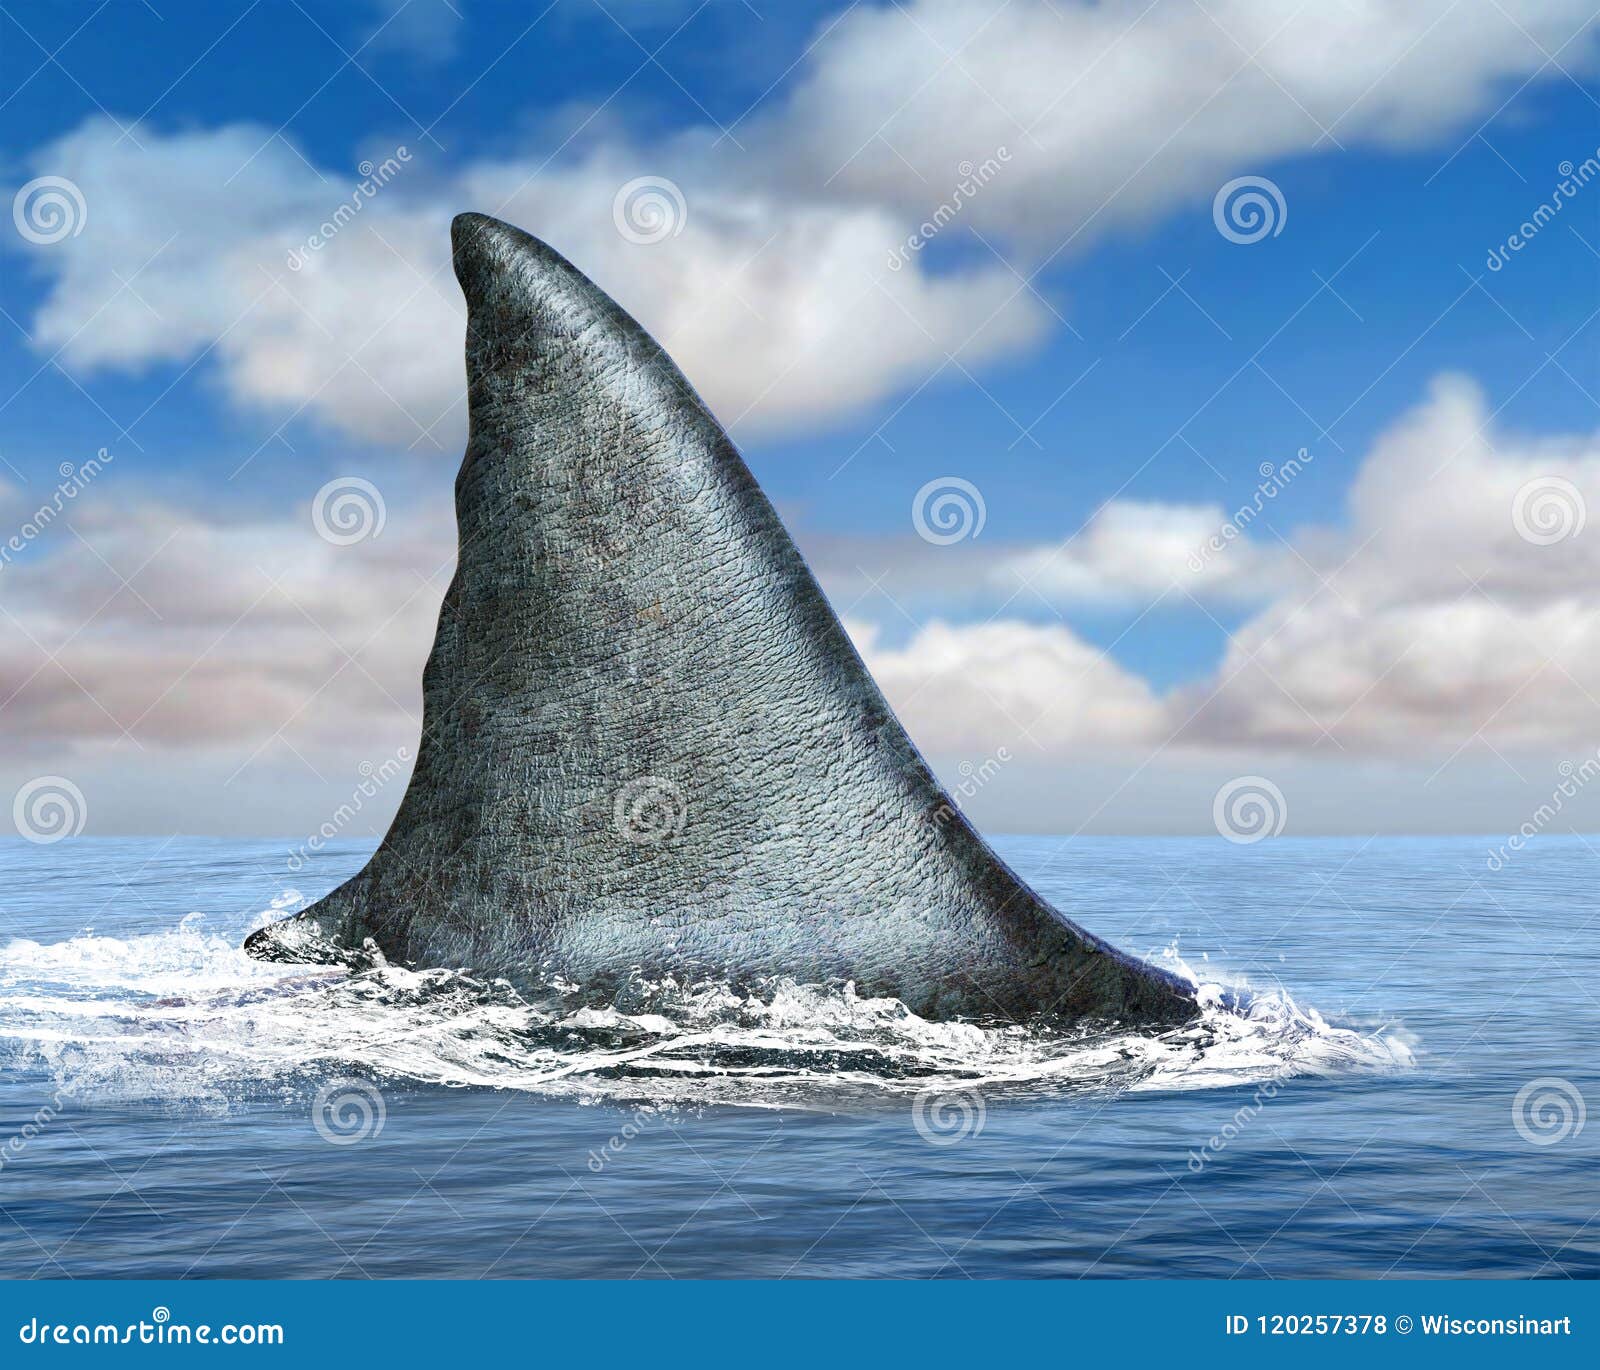 great white shark fin, ocean, sea